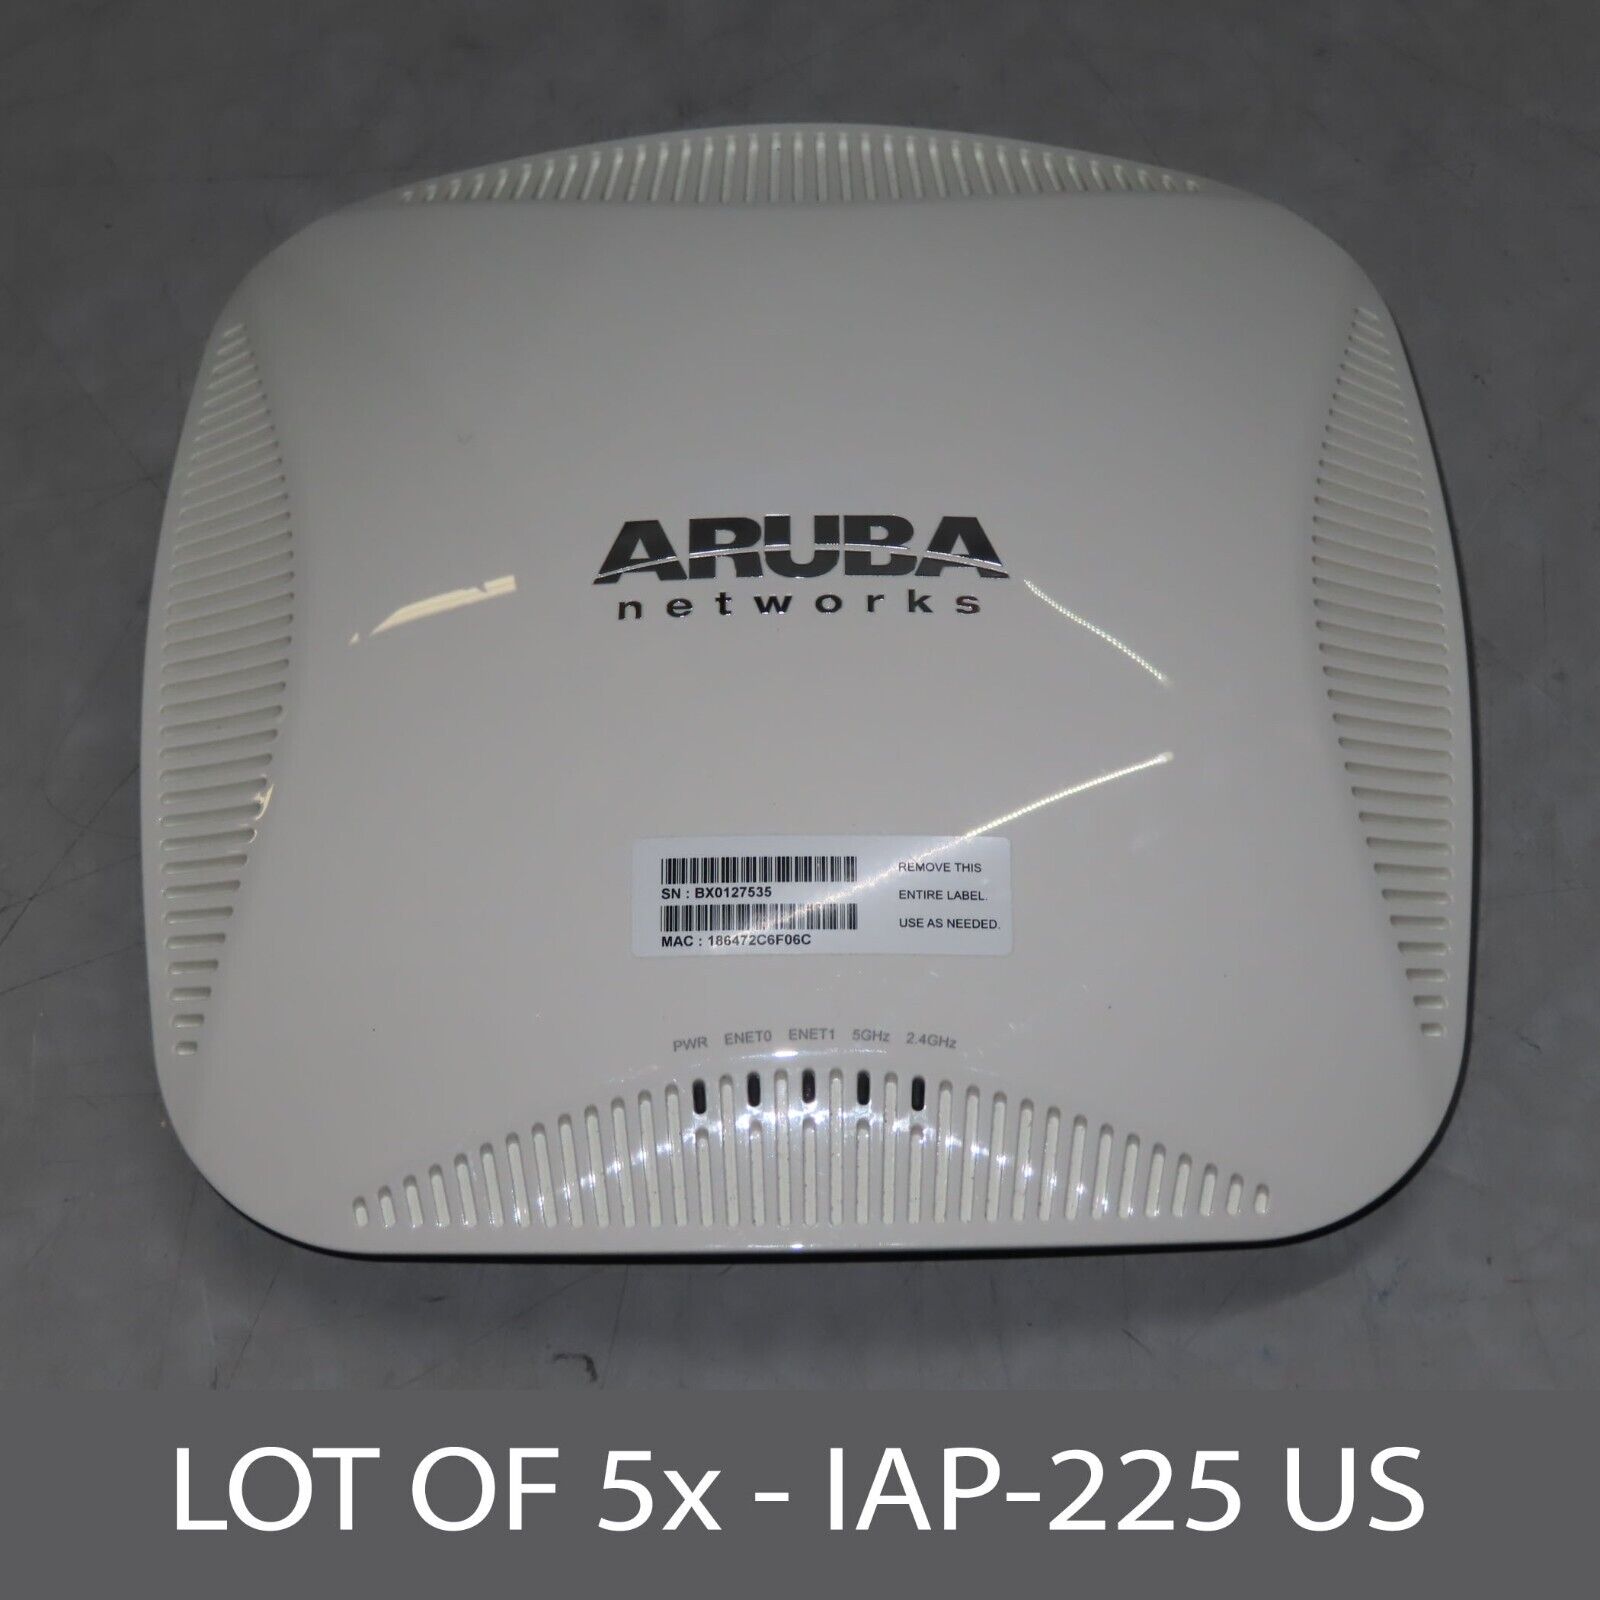 Lot of 5x - Aruba Networks APIN0225 AP-225 Wireless Access Point